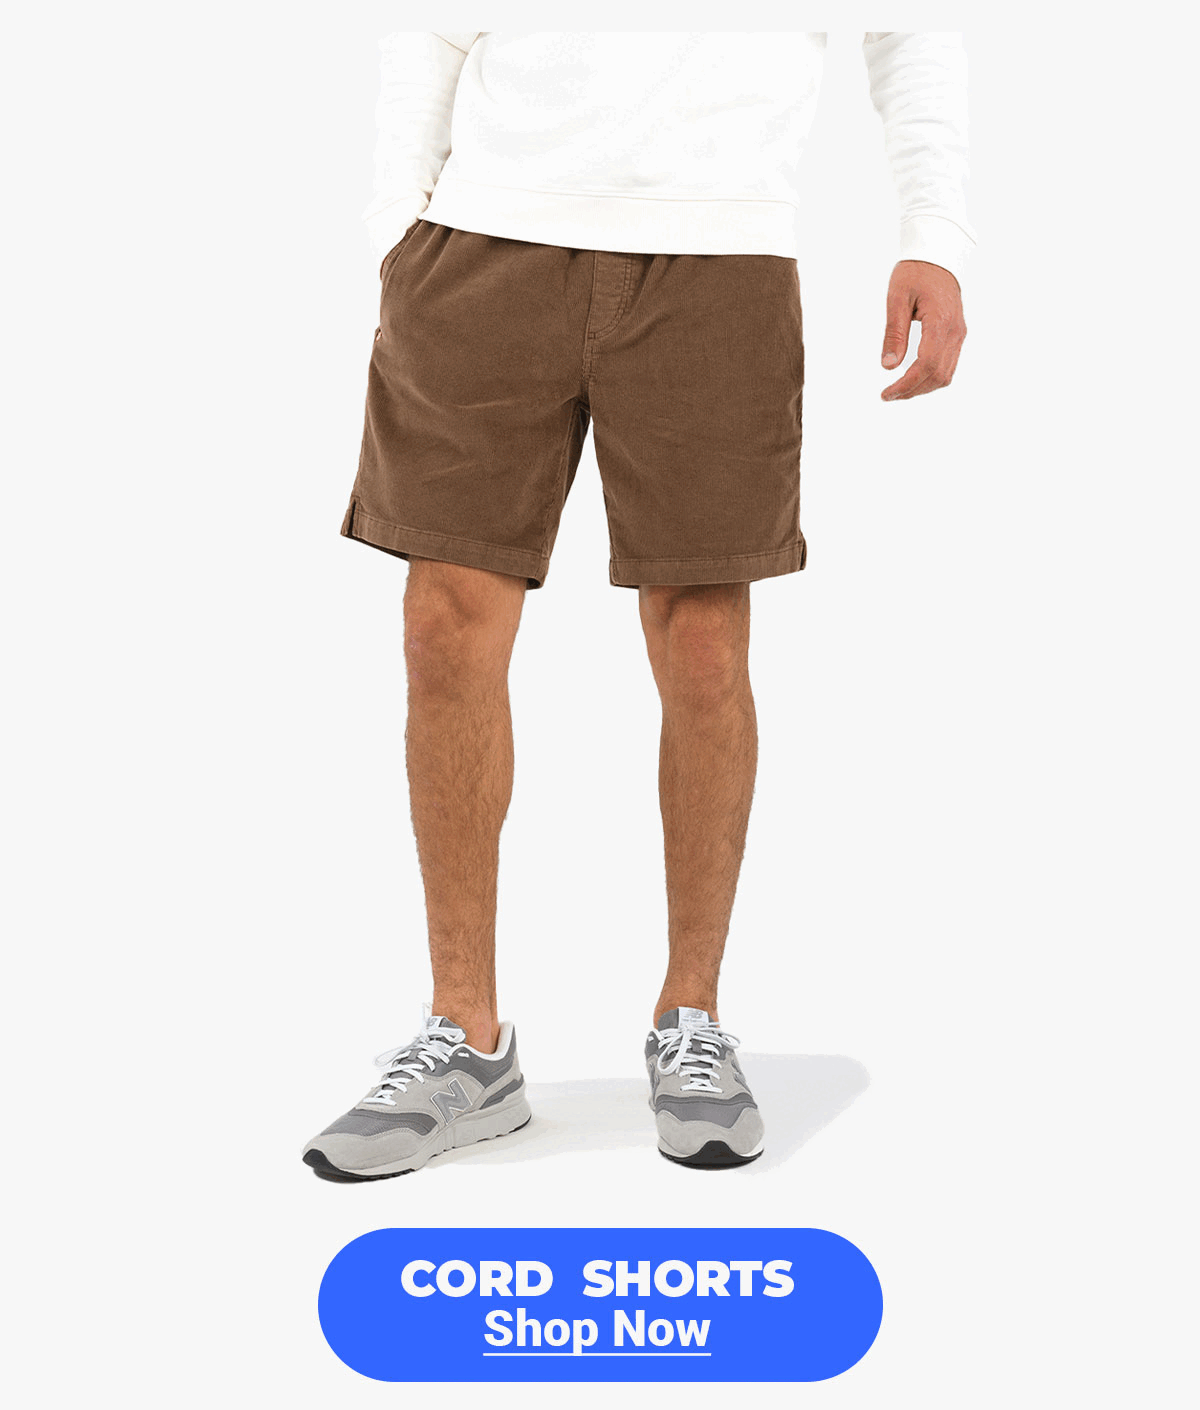 Button: Cord Shorts - Shop Now